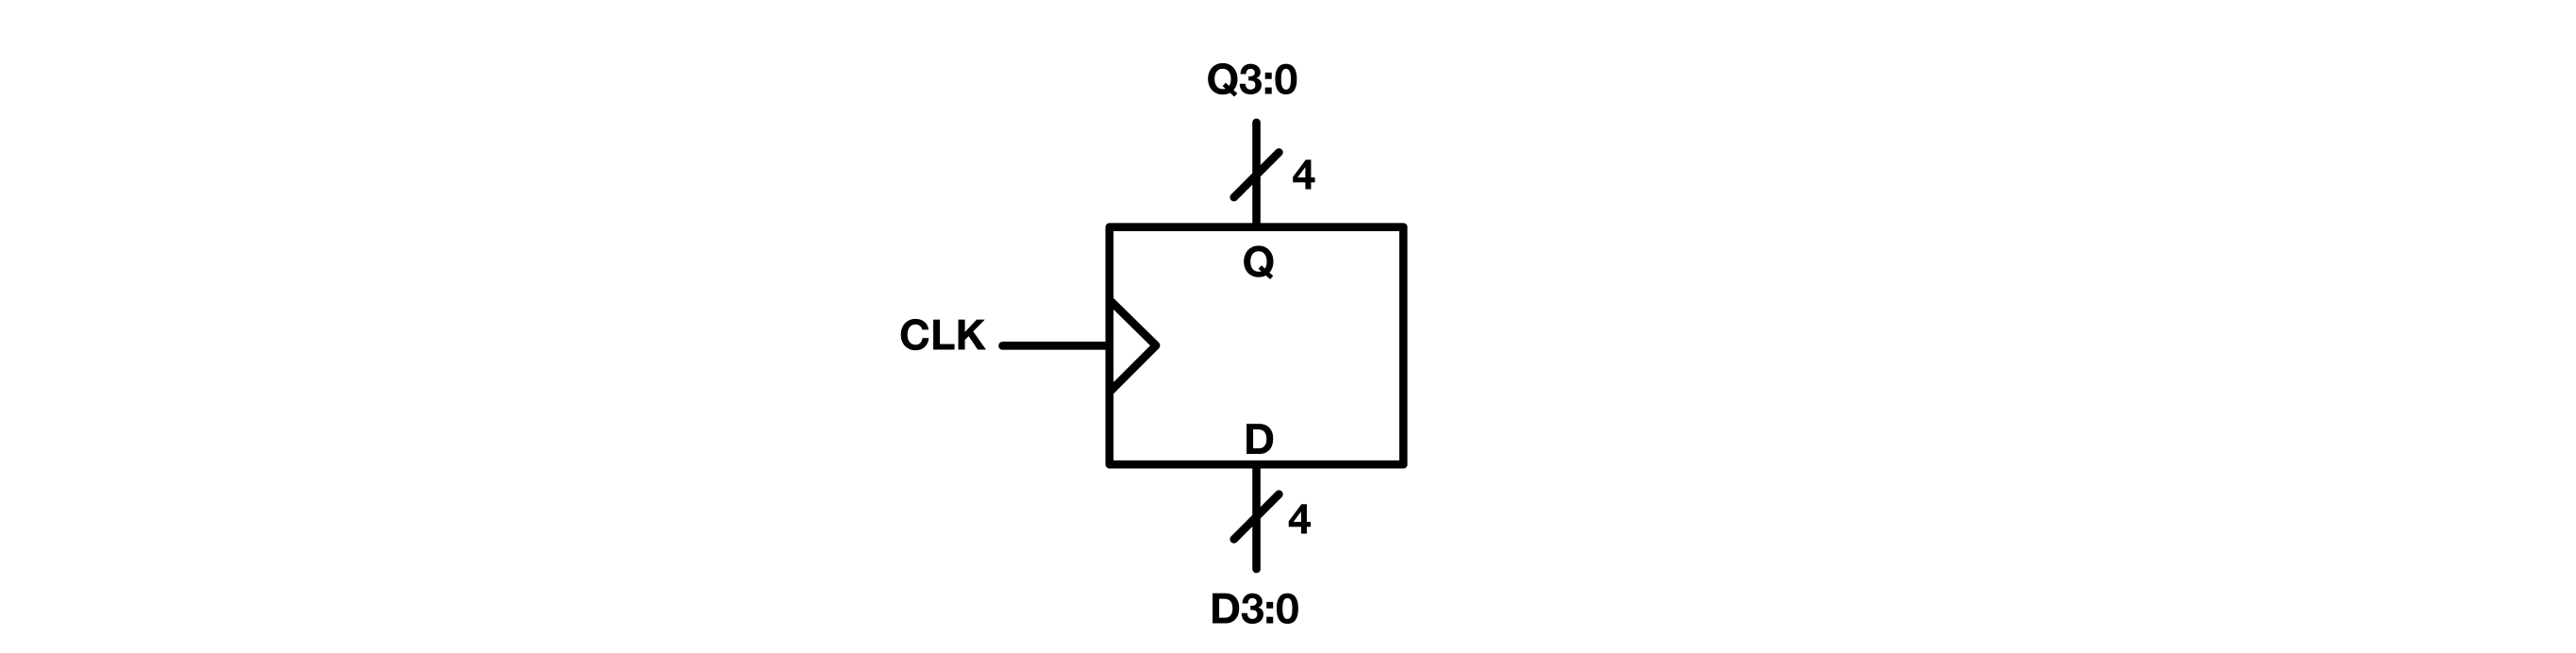 Figure 21: 4-bit Register Symbol